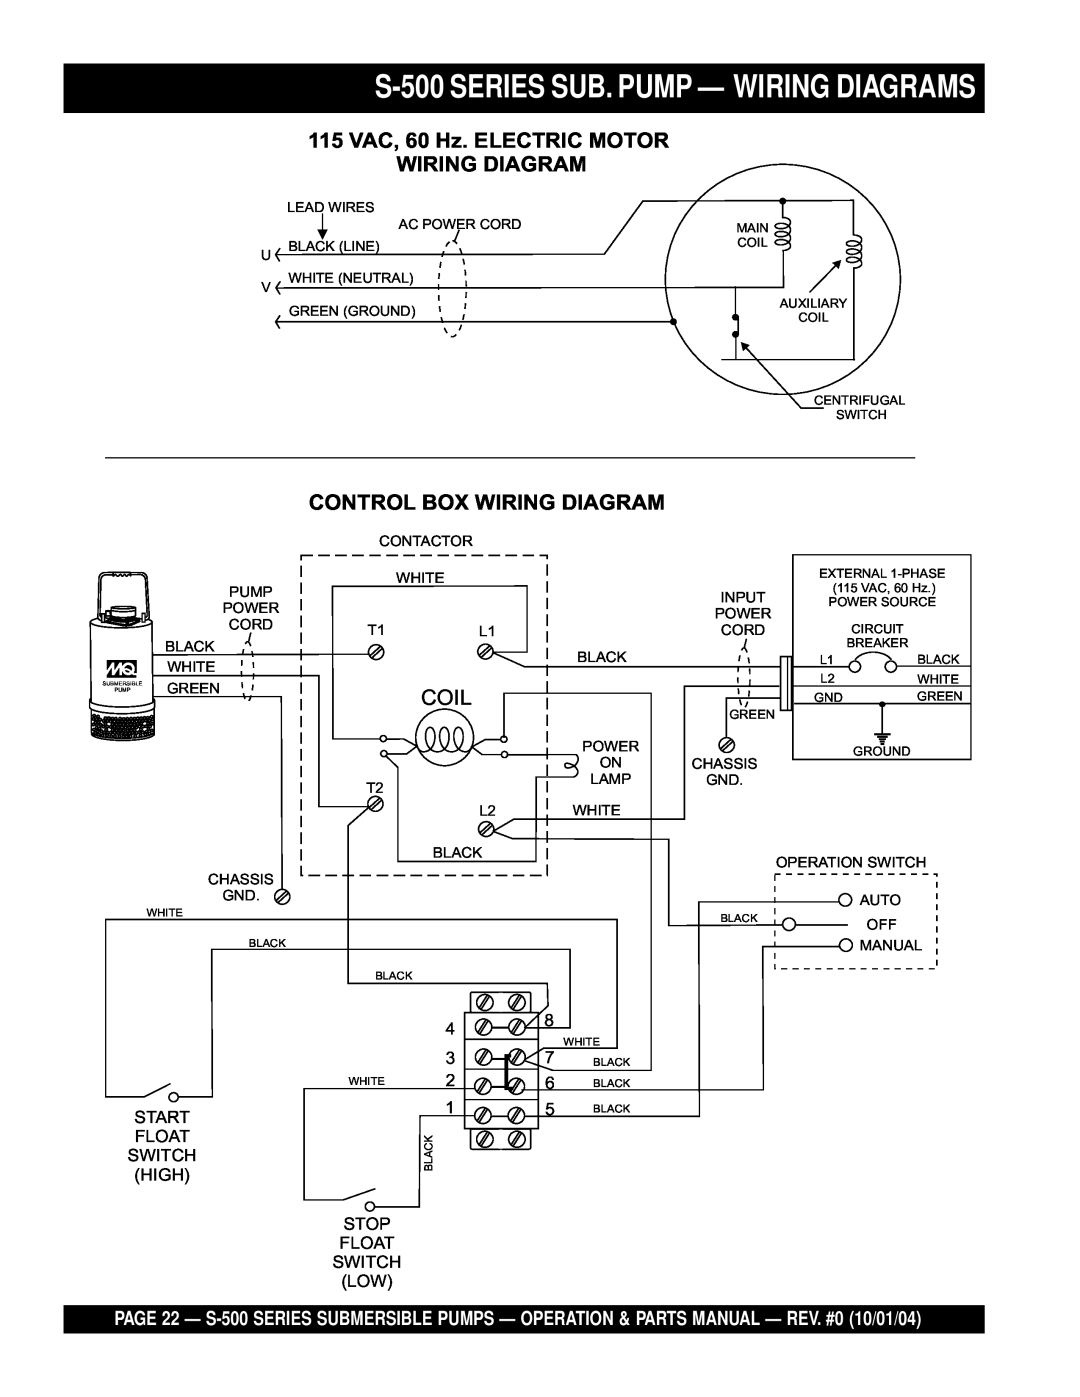 Multiquip manual S-500SERIES SUB. PUMP - WIRING DIAGRAMS, Coil, 115 VAC, 60 Hz. ELECTRIC MOTOR WIRING DIAGRAM 